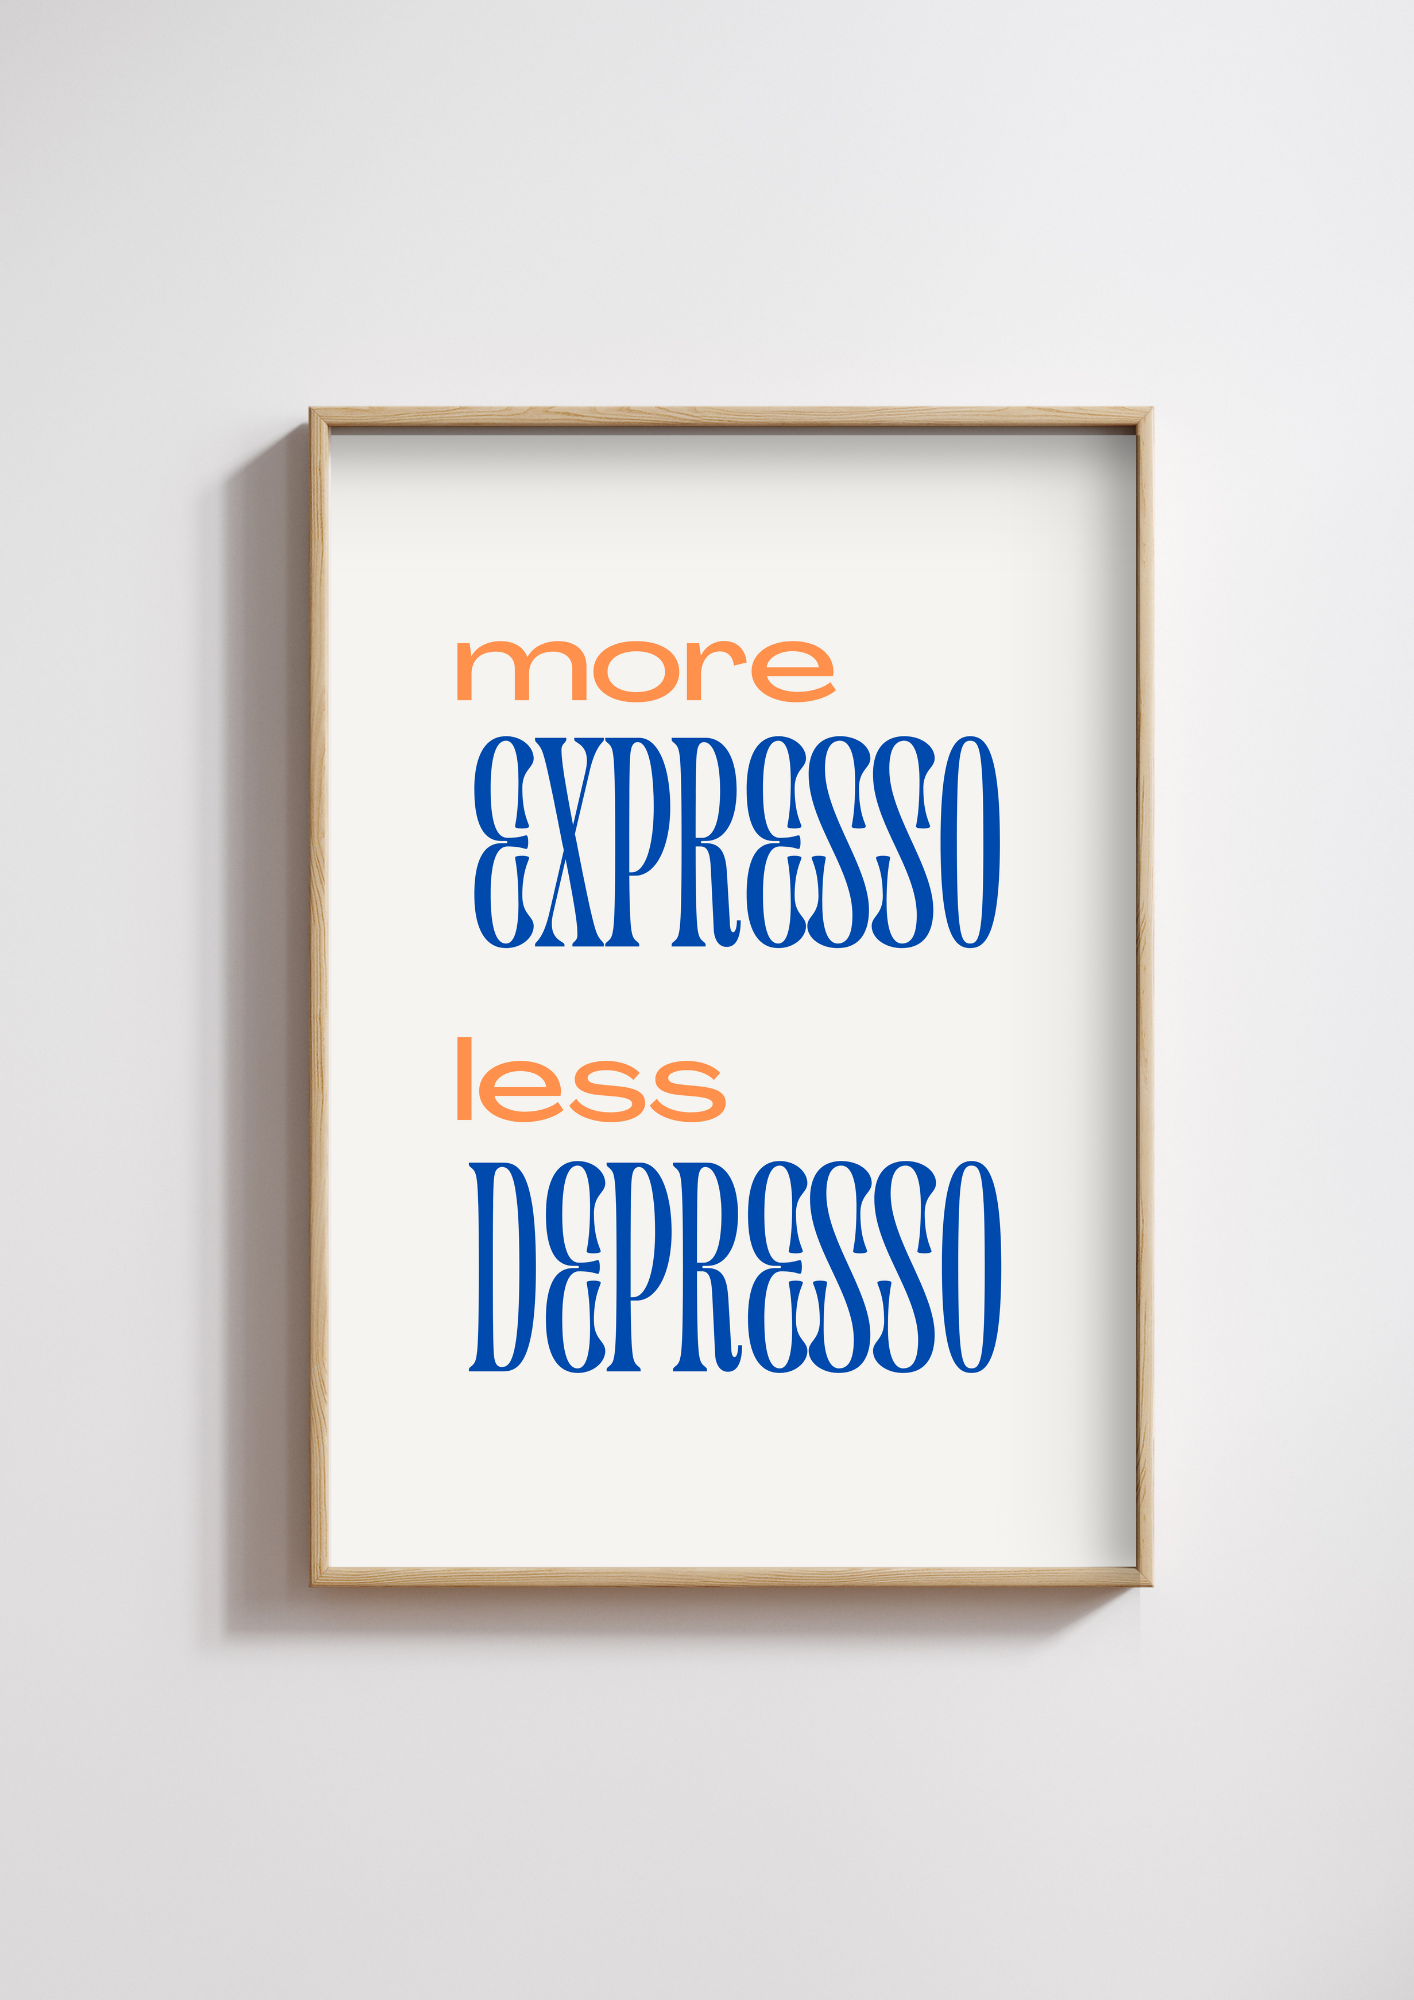 More expresso less depresso poster